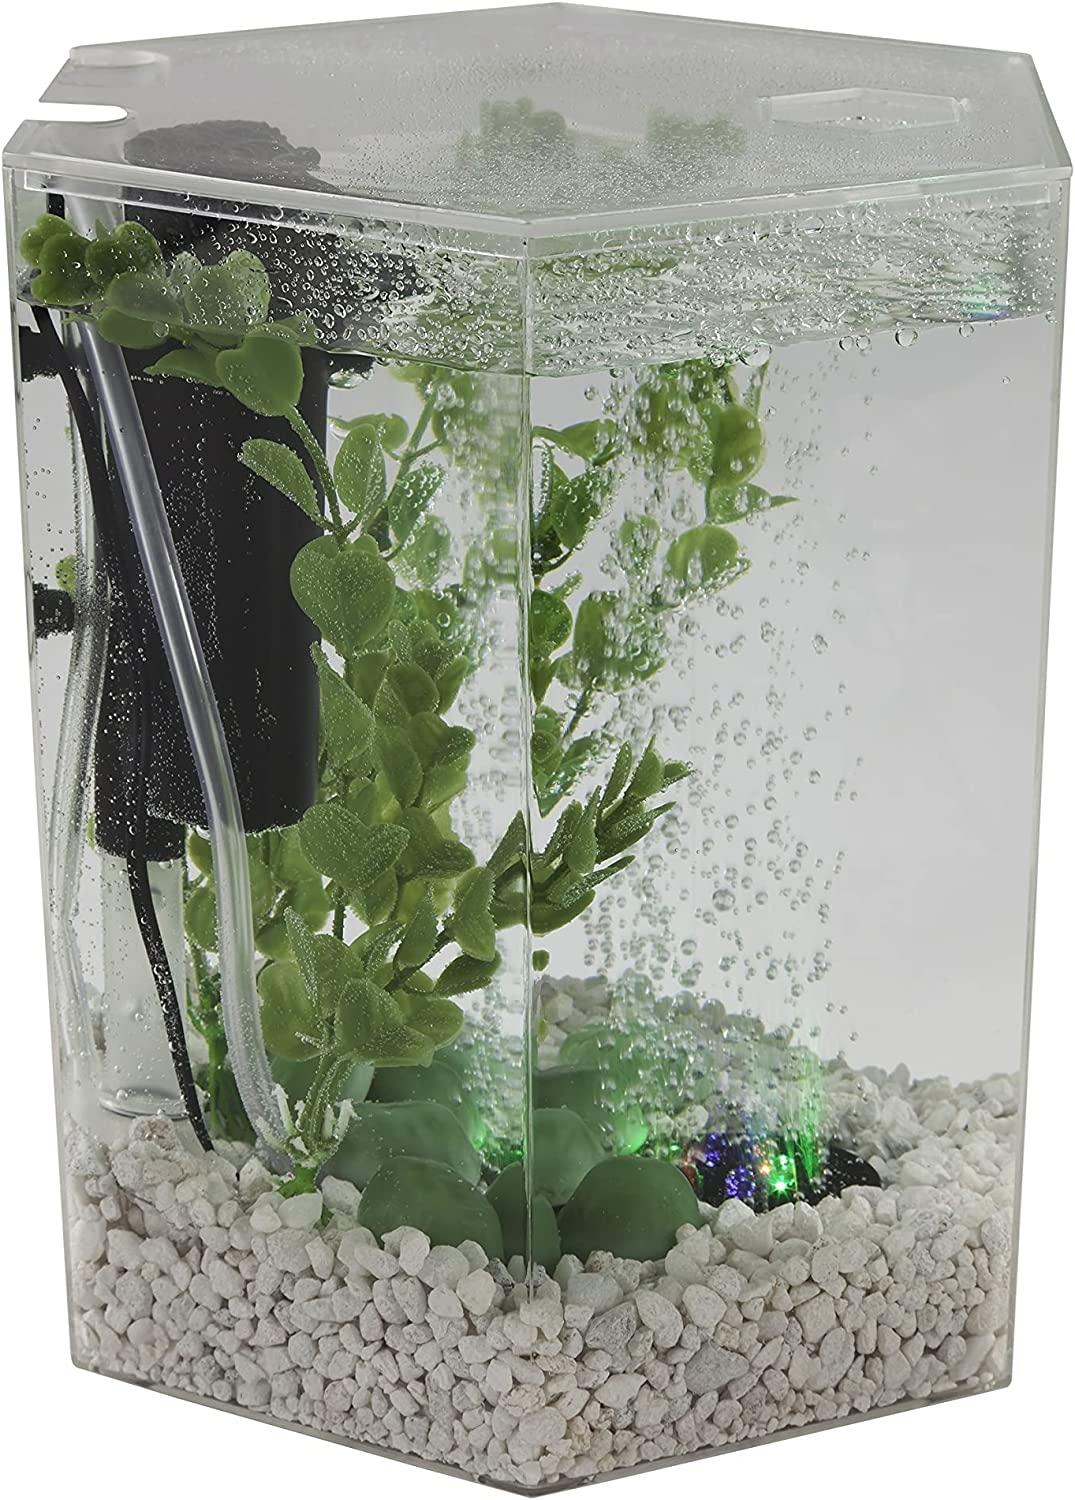 Tetra Bubbling LED Aquarium Kit 1 Gallon, Hexagon Shape, With  Color-Changing Light Disc